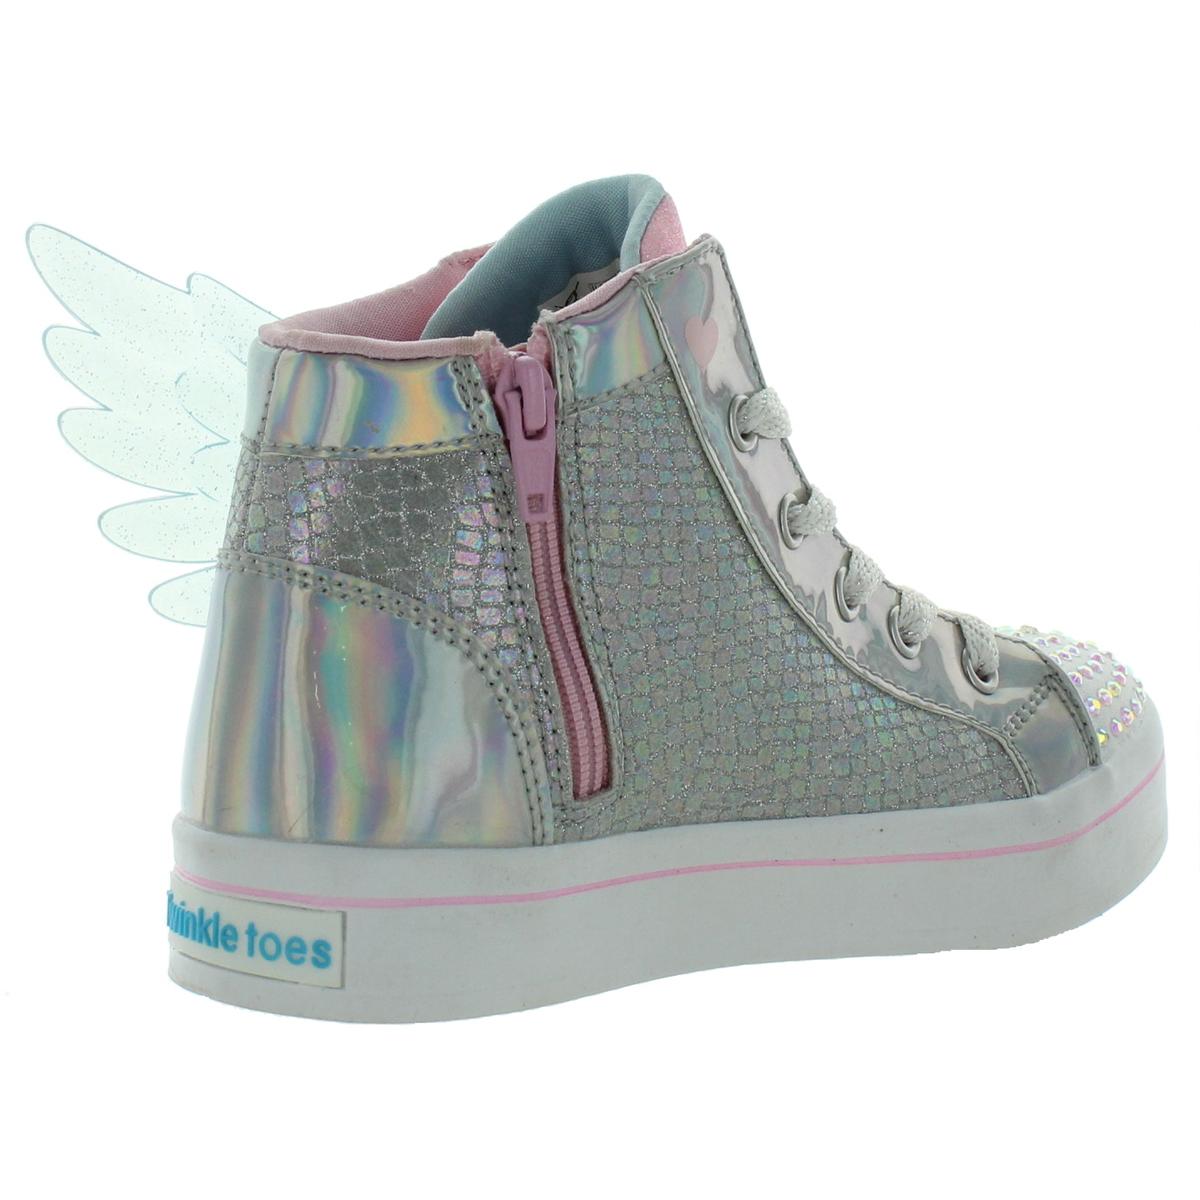 Skechers Unicorn Wings Girls Embellished Light-Up Shoes